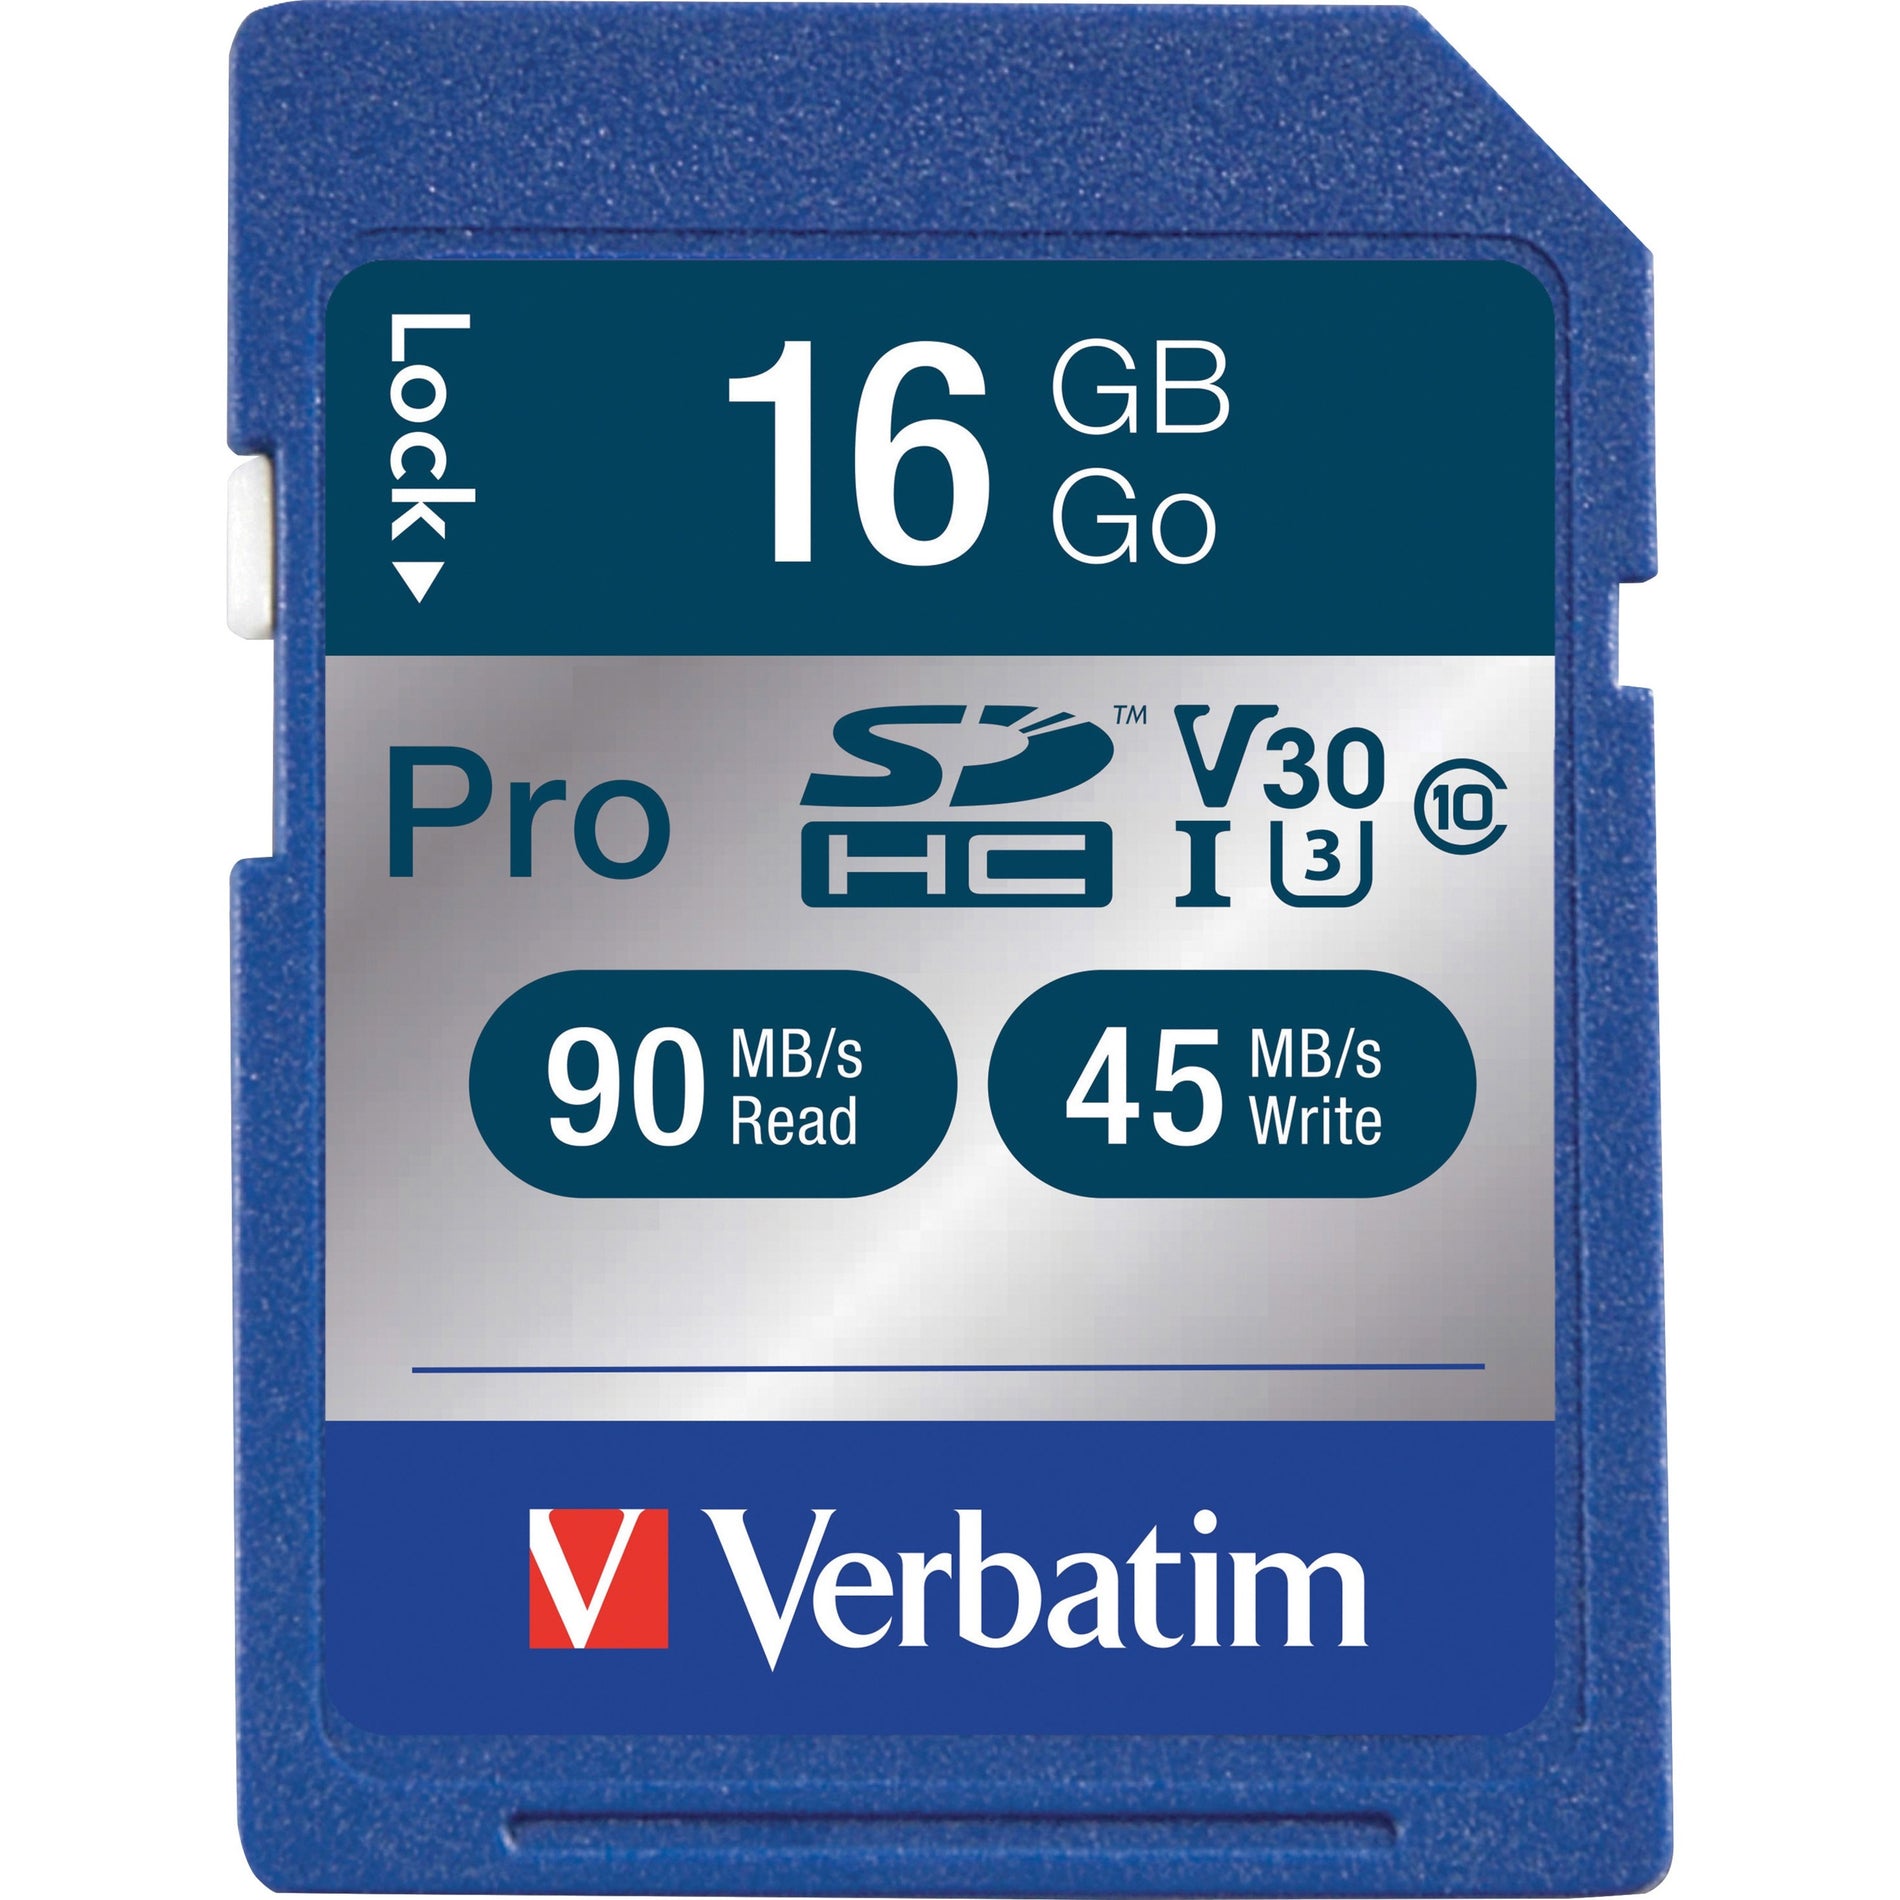 Verbatim 98046 16GB Pro 600X SDHC Memory Card UHS-I V30 U3 Class 10 Shock Proof Water Resistant